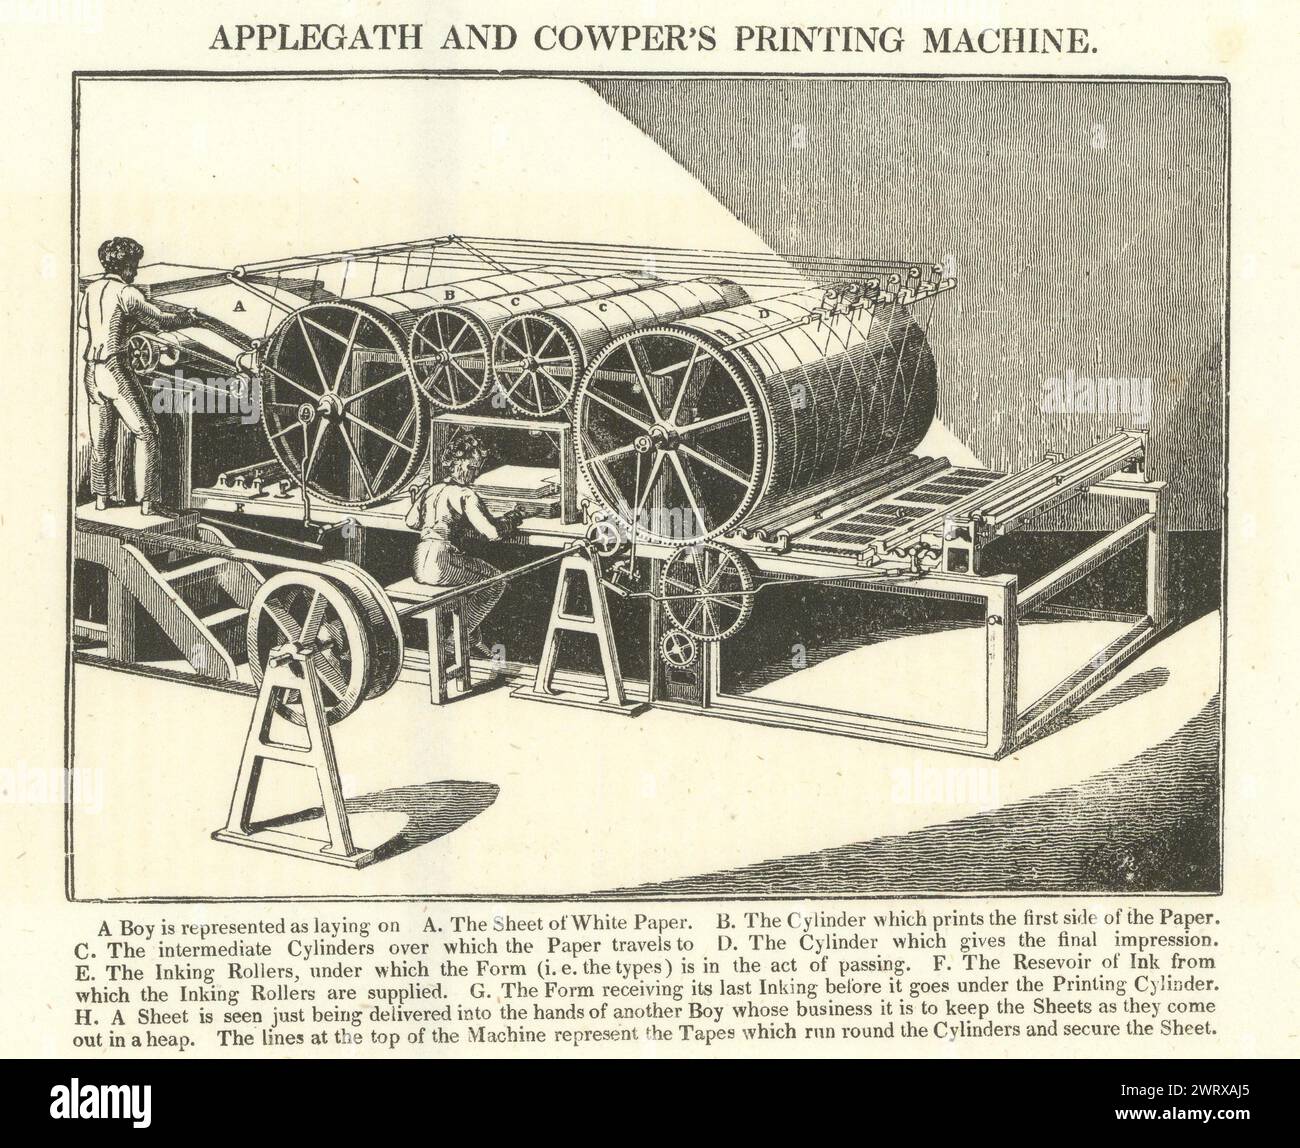 Applegath & Cowper's 4-cylinder Printing Machine, Stamford Street, Lambeth 1827 Stock Photo